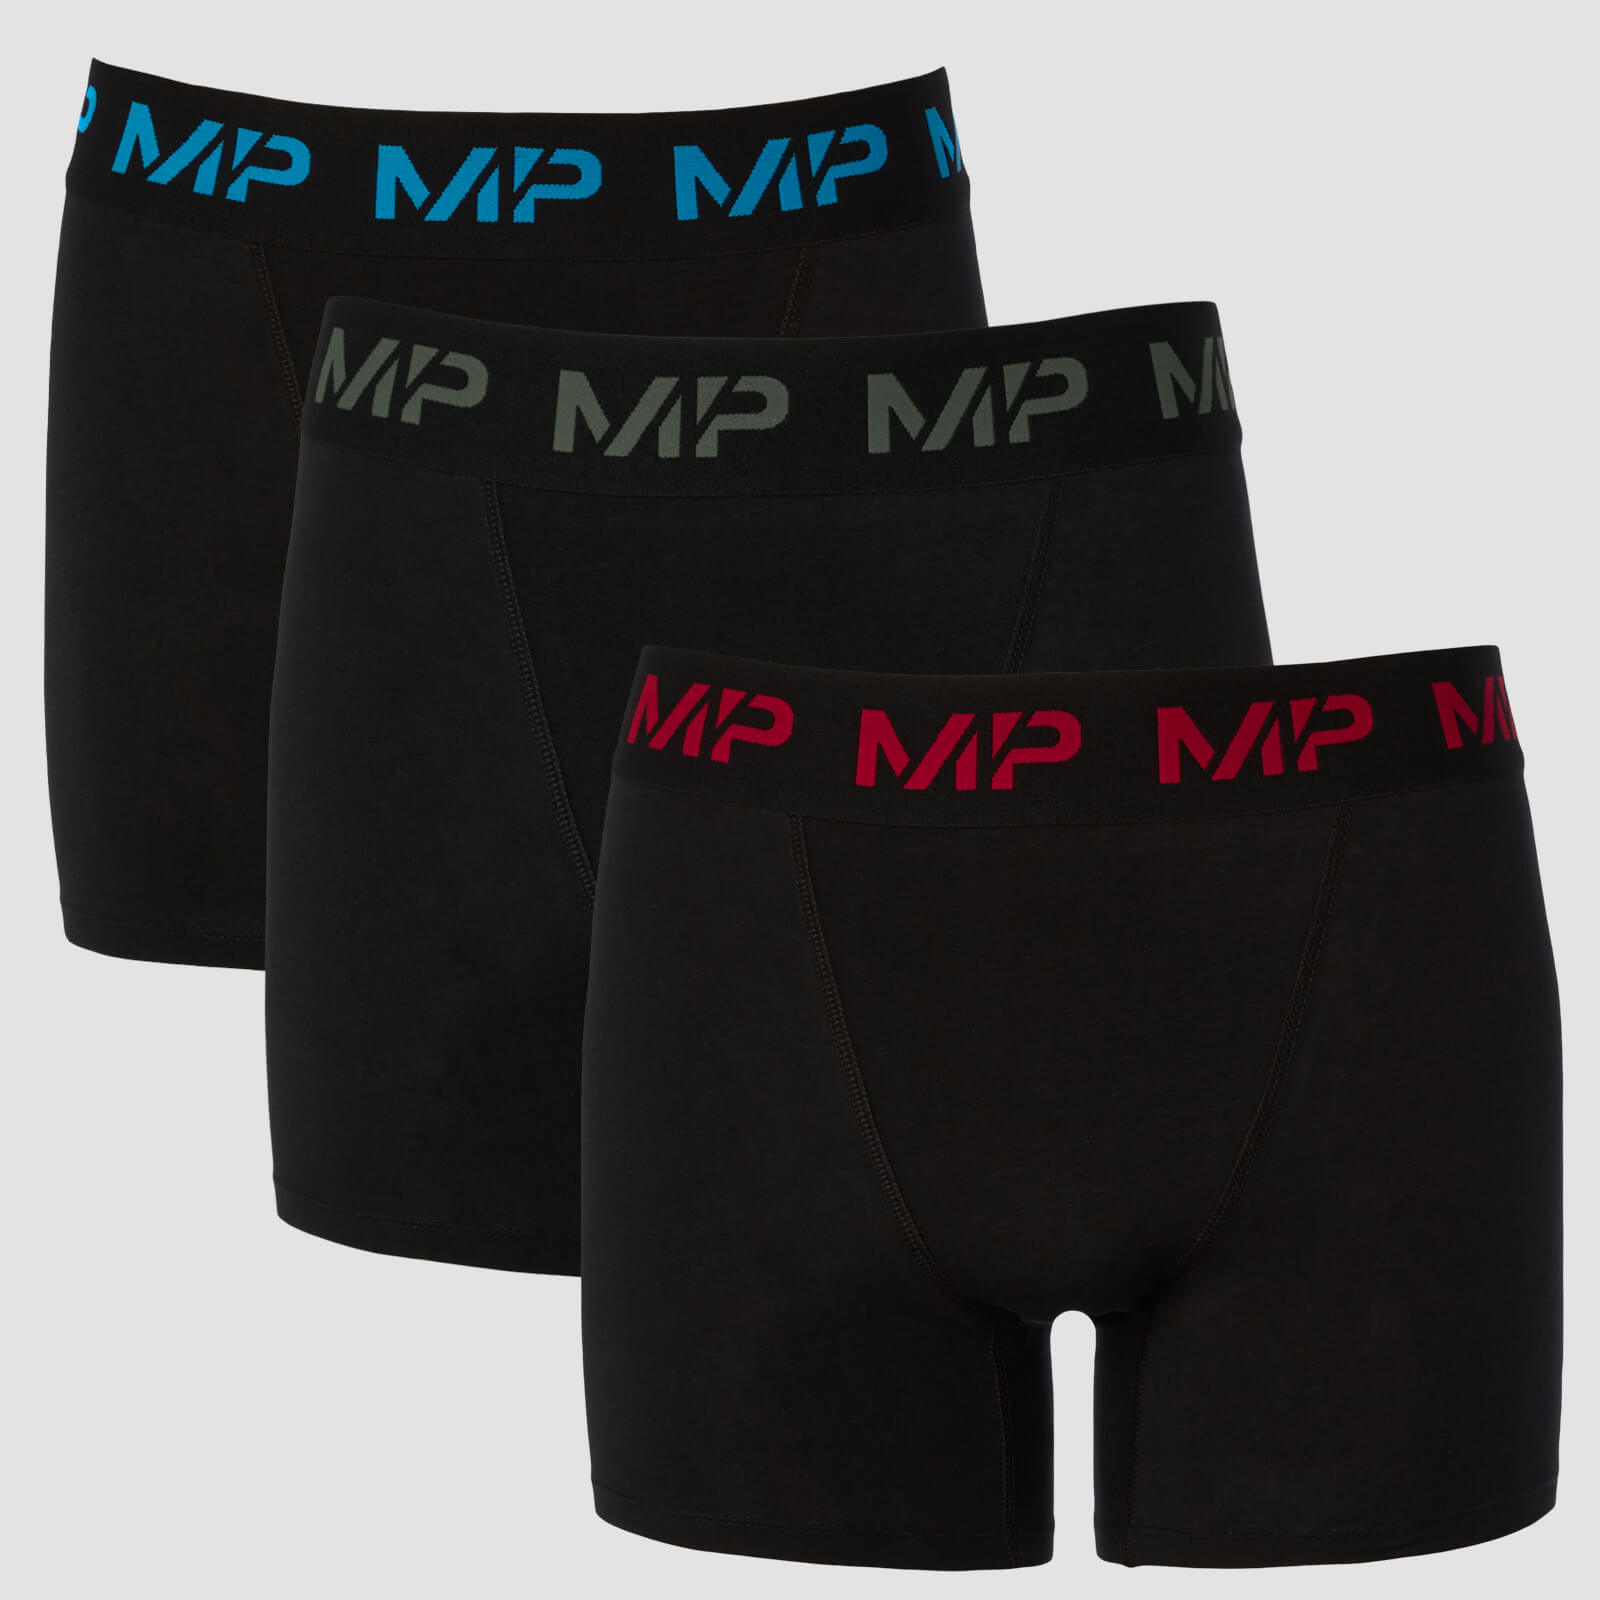 MP Men's Coloured logo Boxers (3 Pack) - Black/Wine/Cactus/Bright Blue - XXS